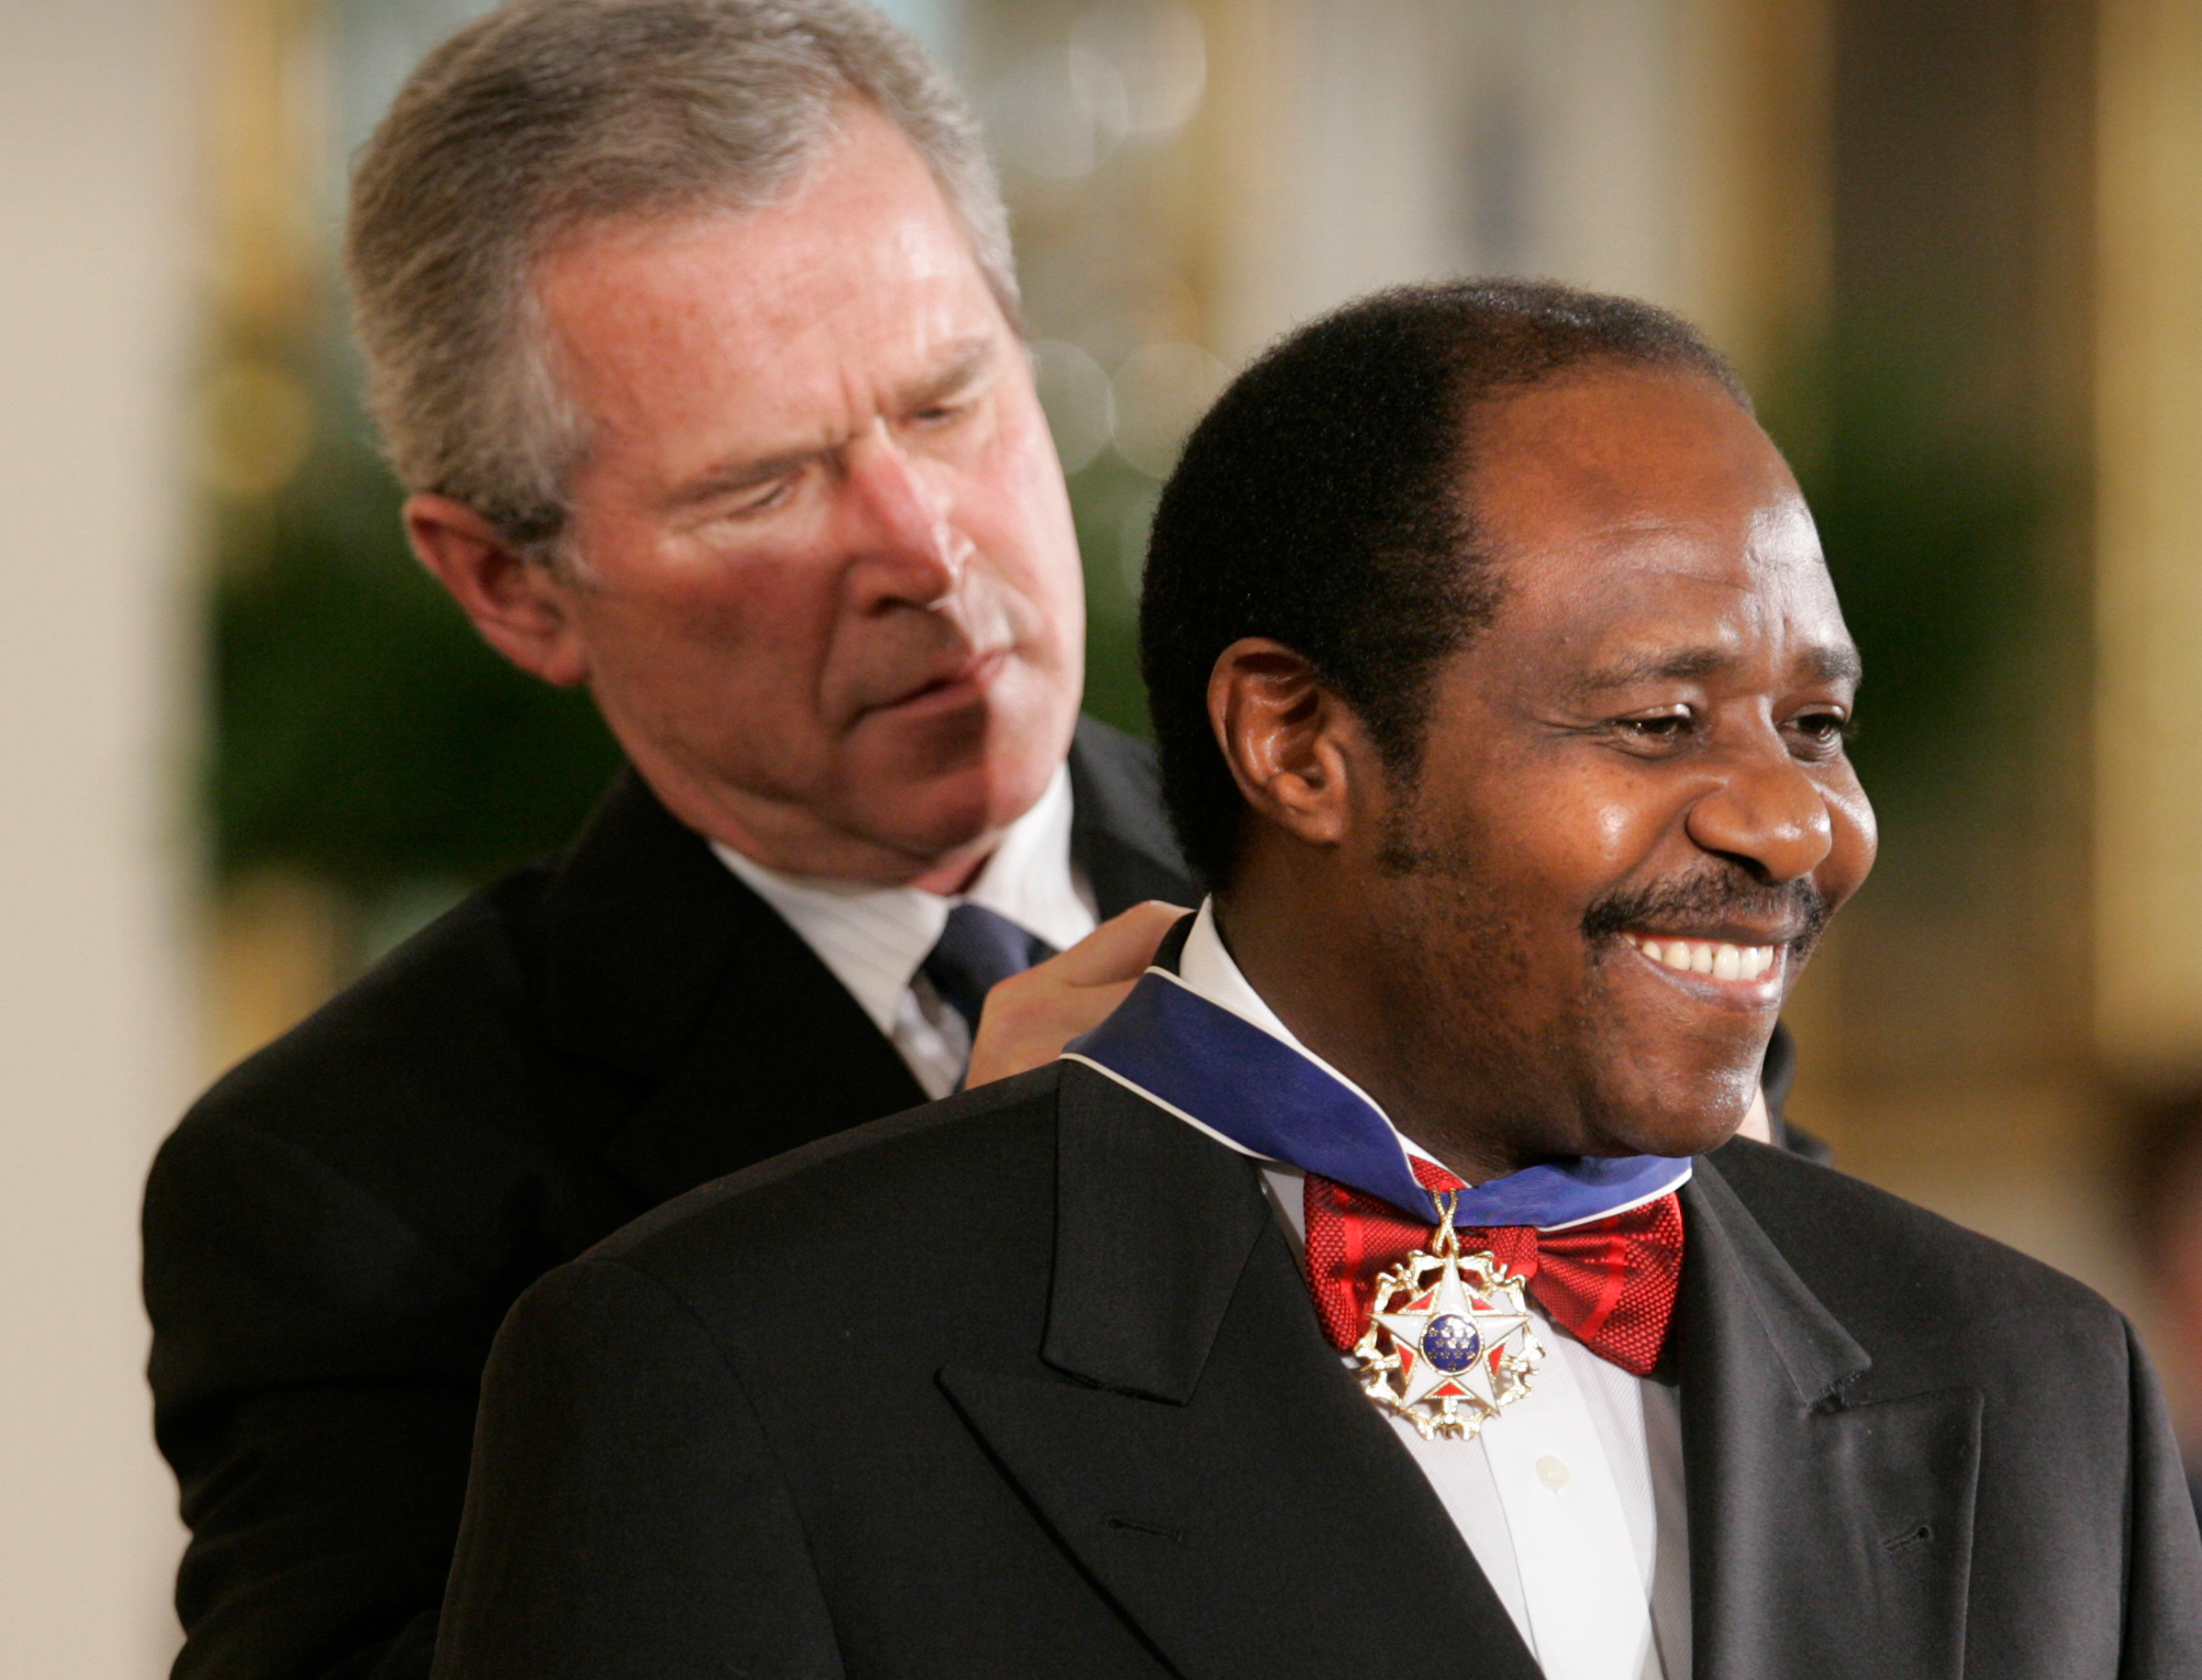 President Bush awards Paul Rusesabagina the Presidential Medal of Freedom Award in Washington, D.C., on Nov. 9, 2005.